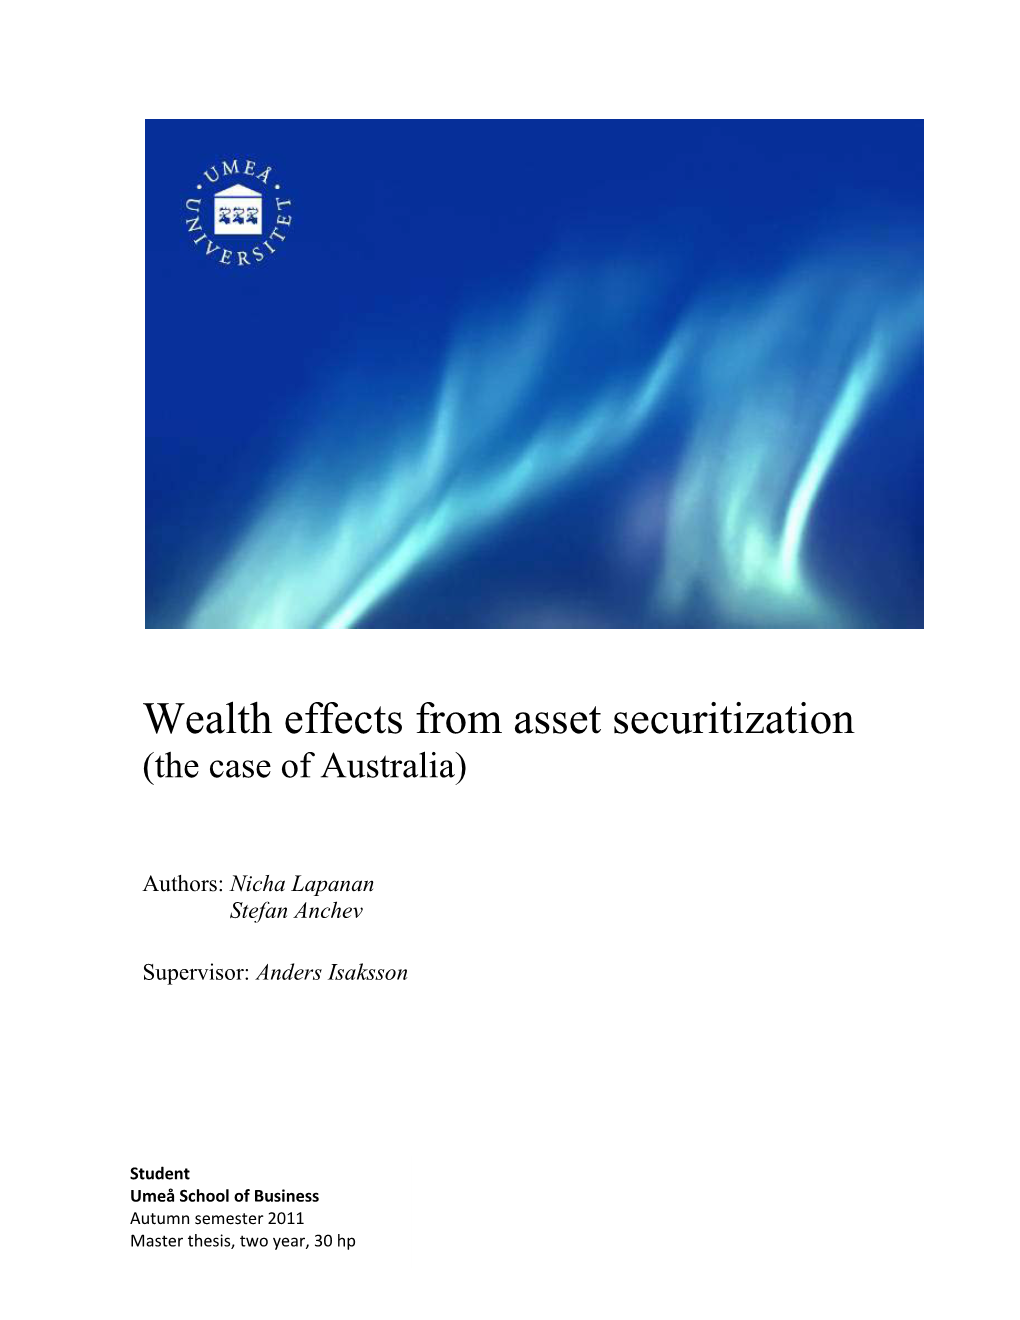 Asset Securitization (The Case of Australia)